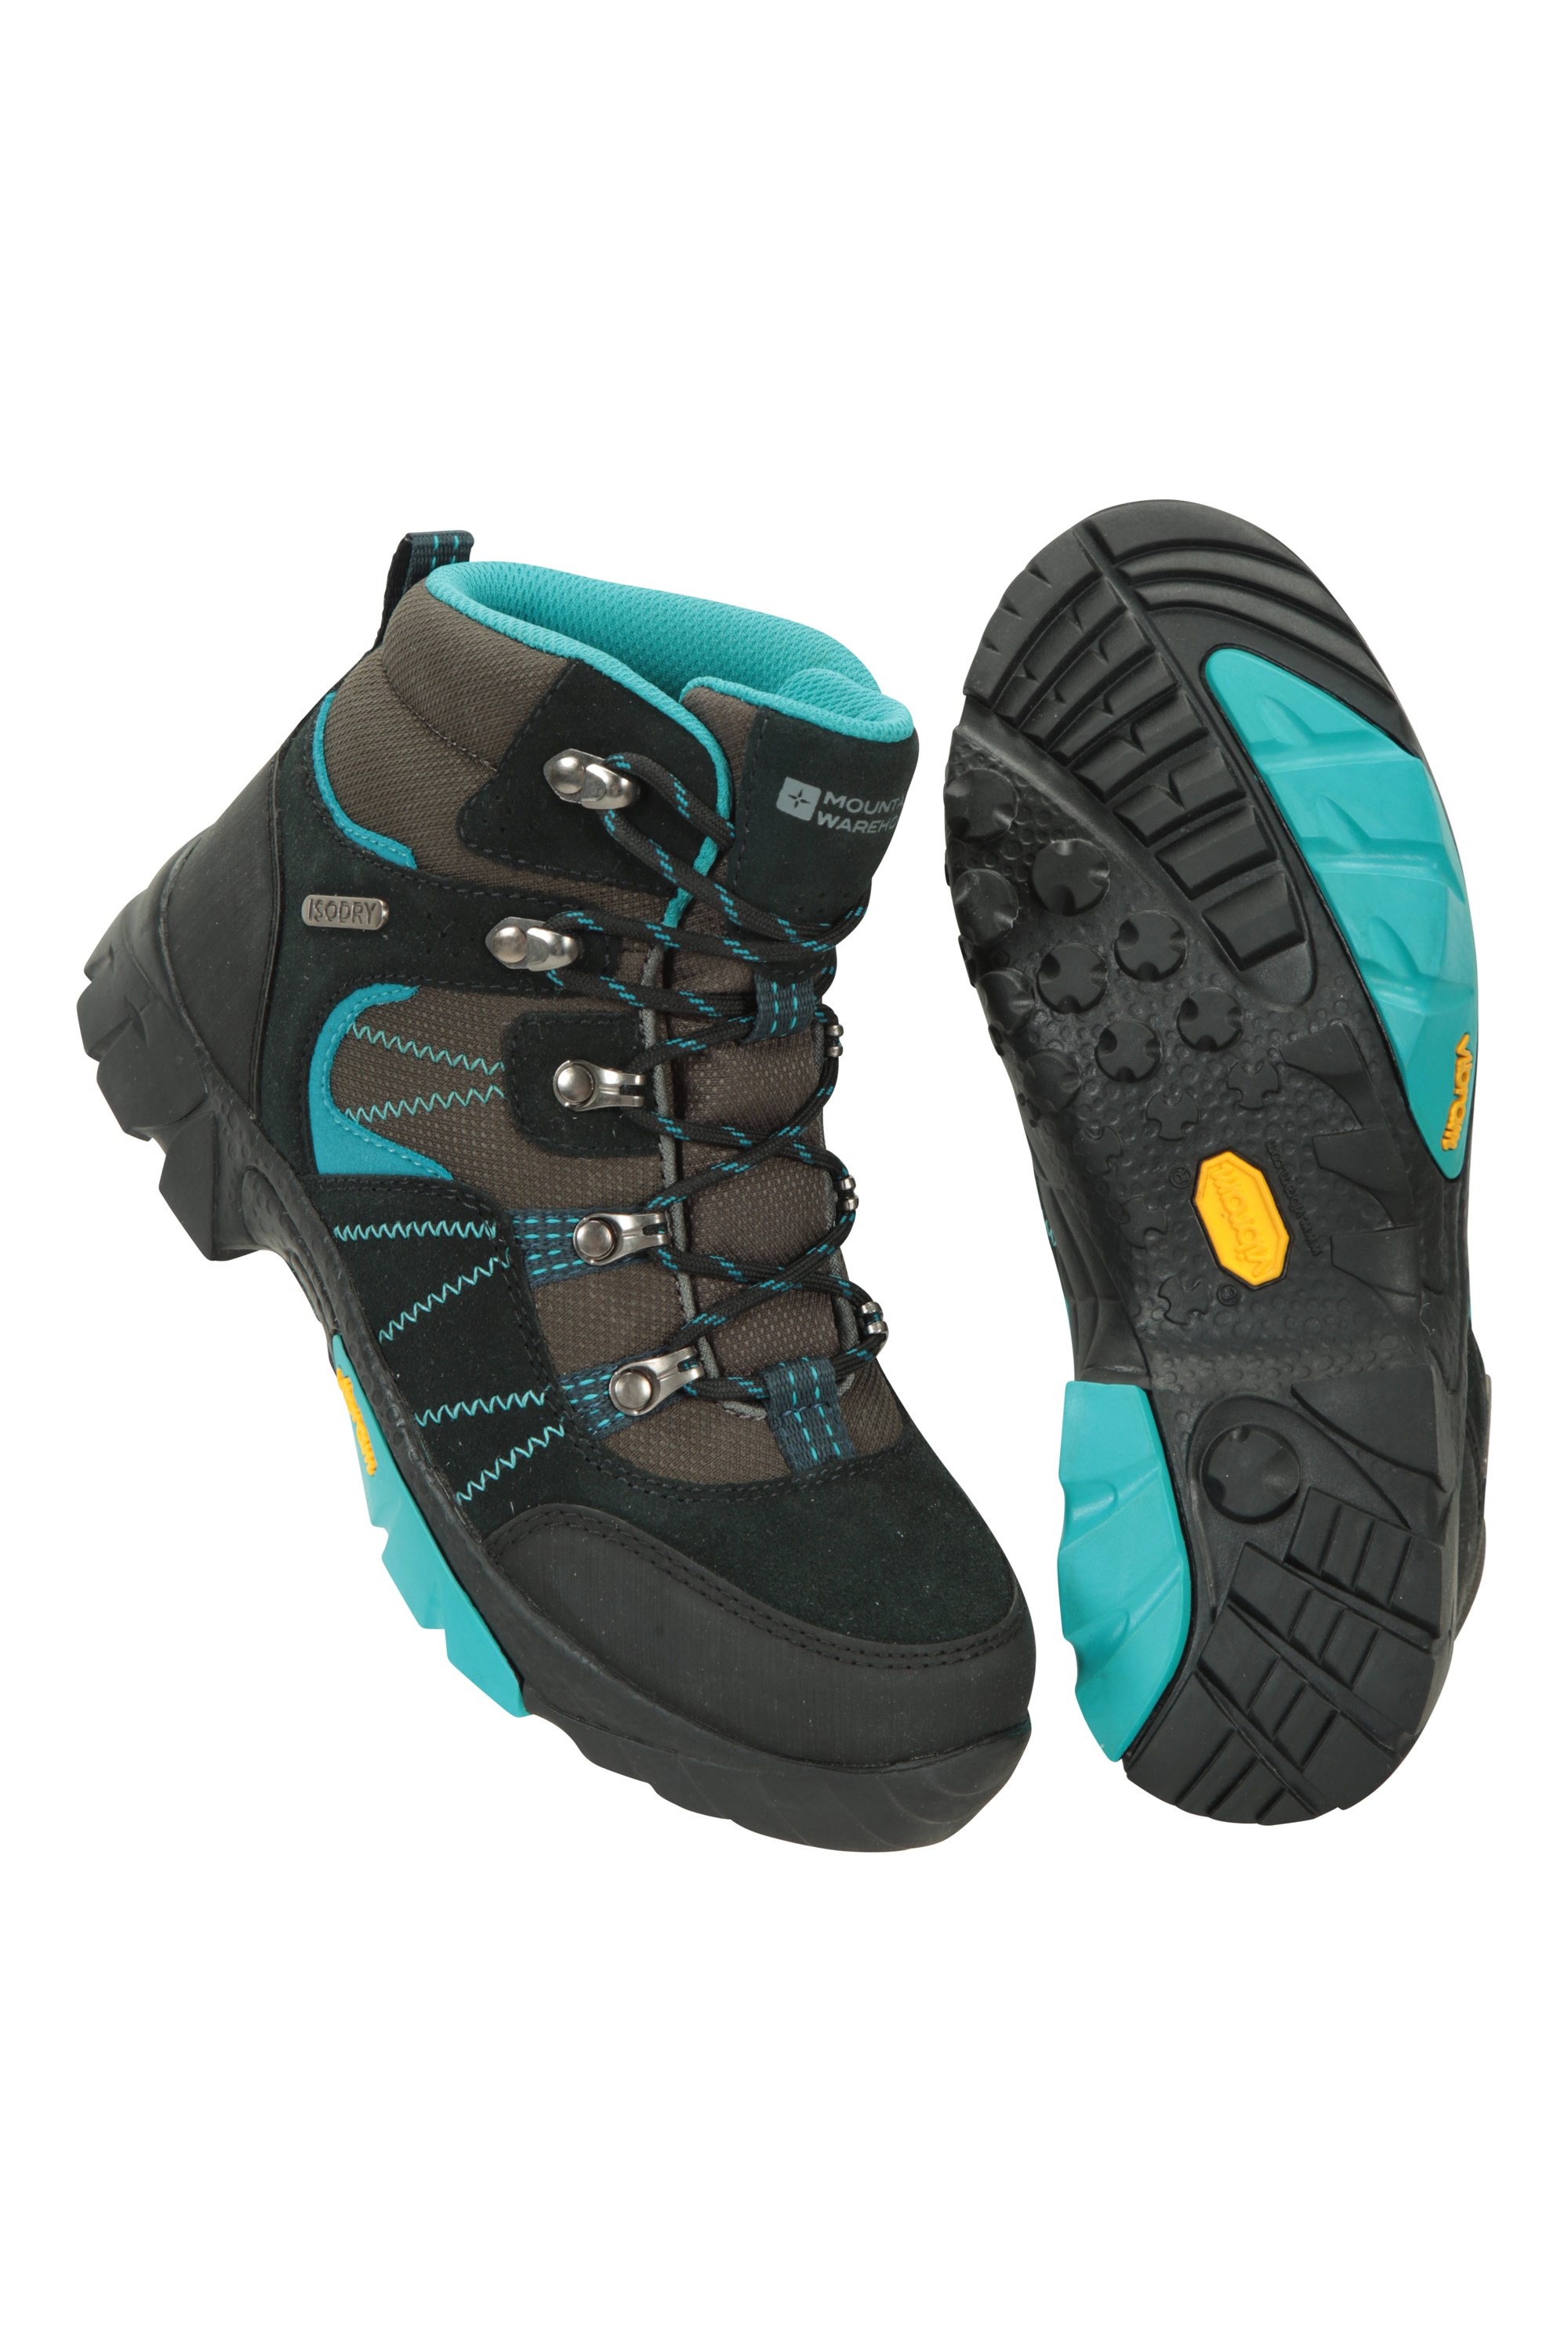 Mountain Warehouse Camo Waterproof Kids Boots Casual Walking Boots ...